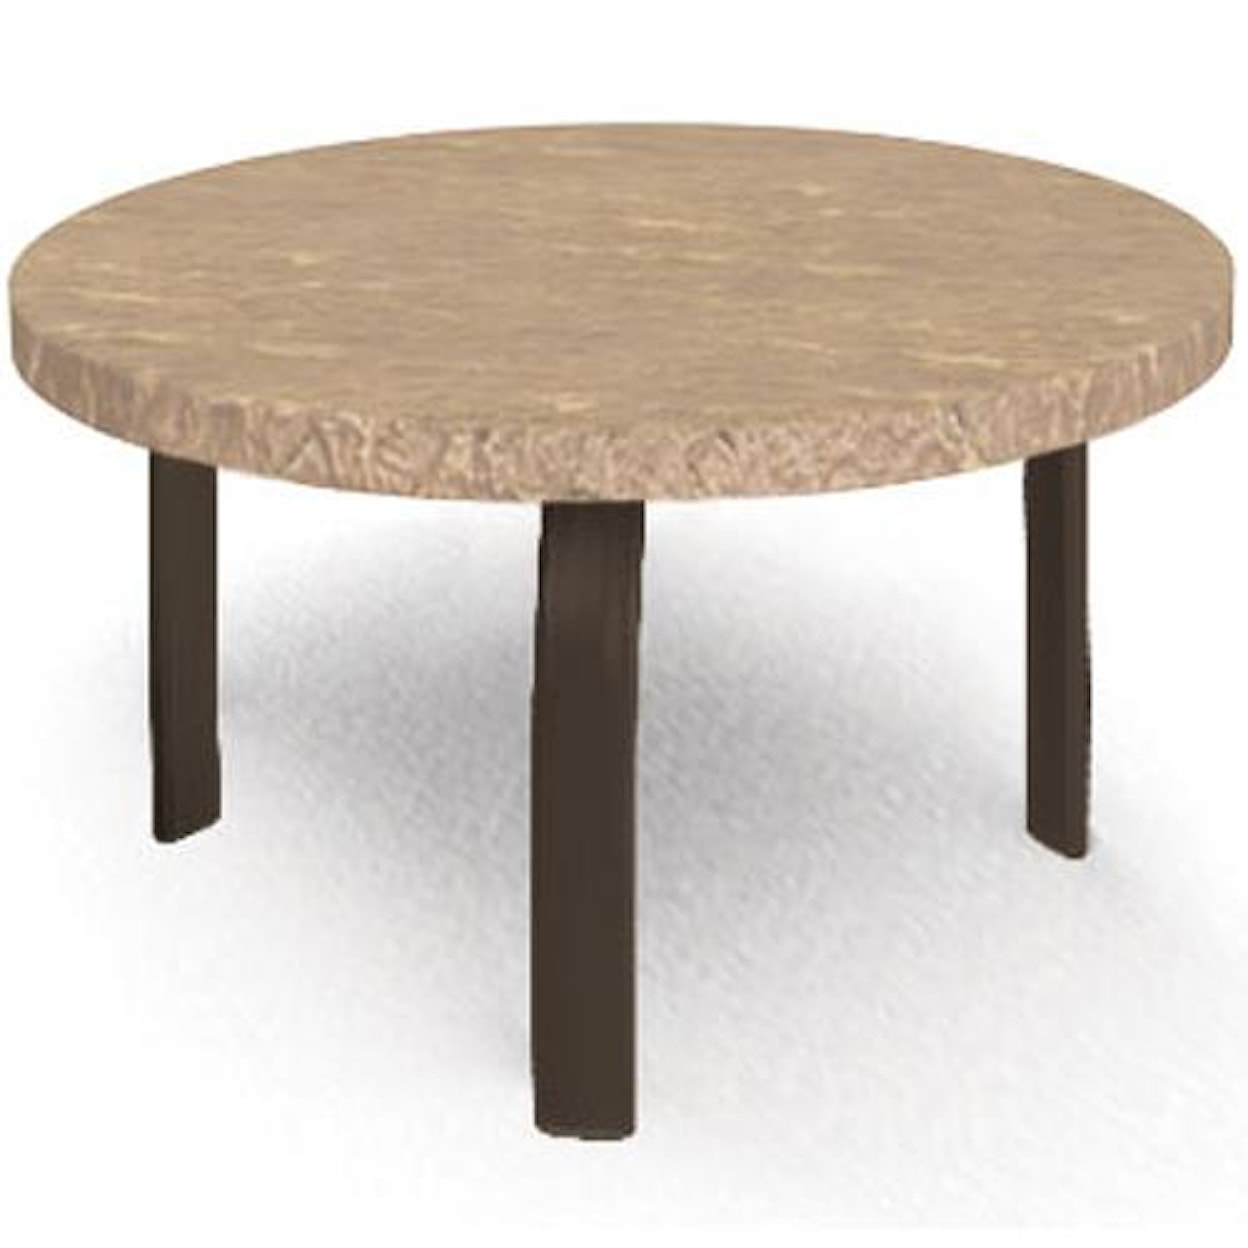 Homecrest Sandstone 24" Round Side Table